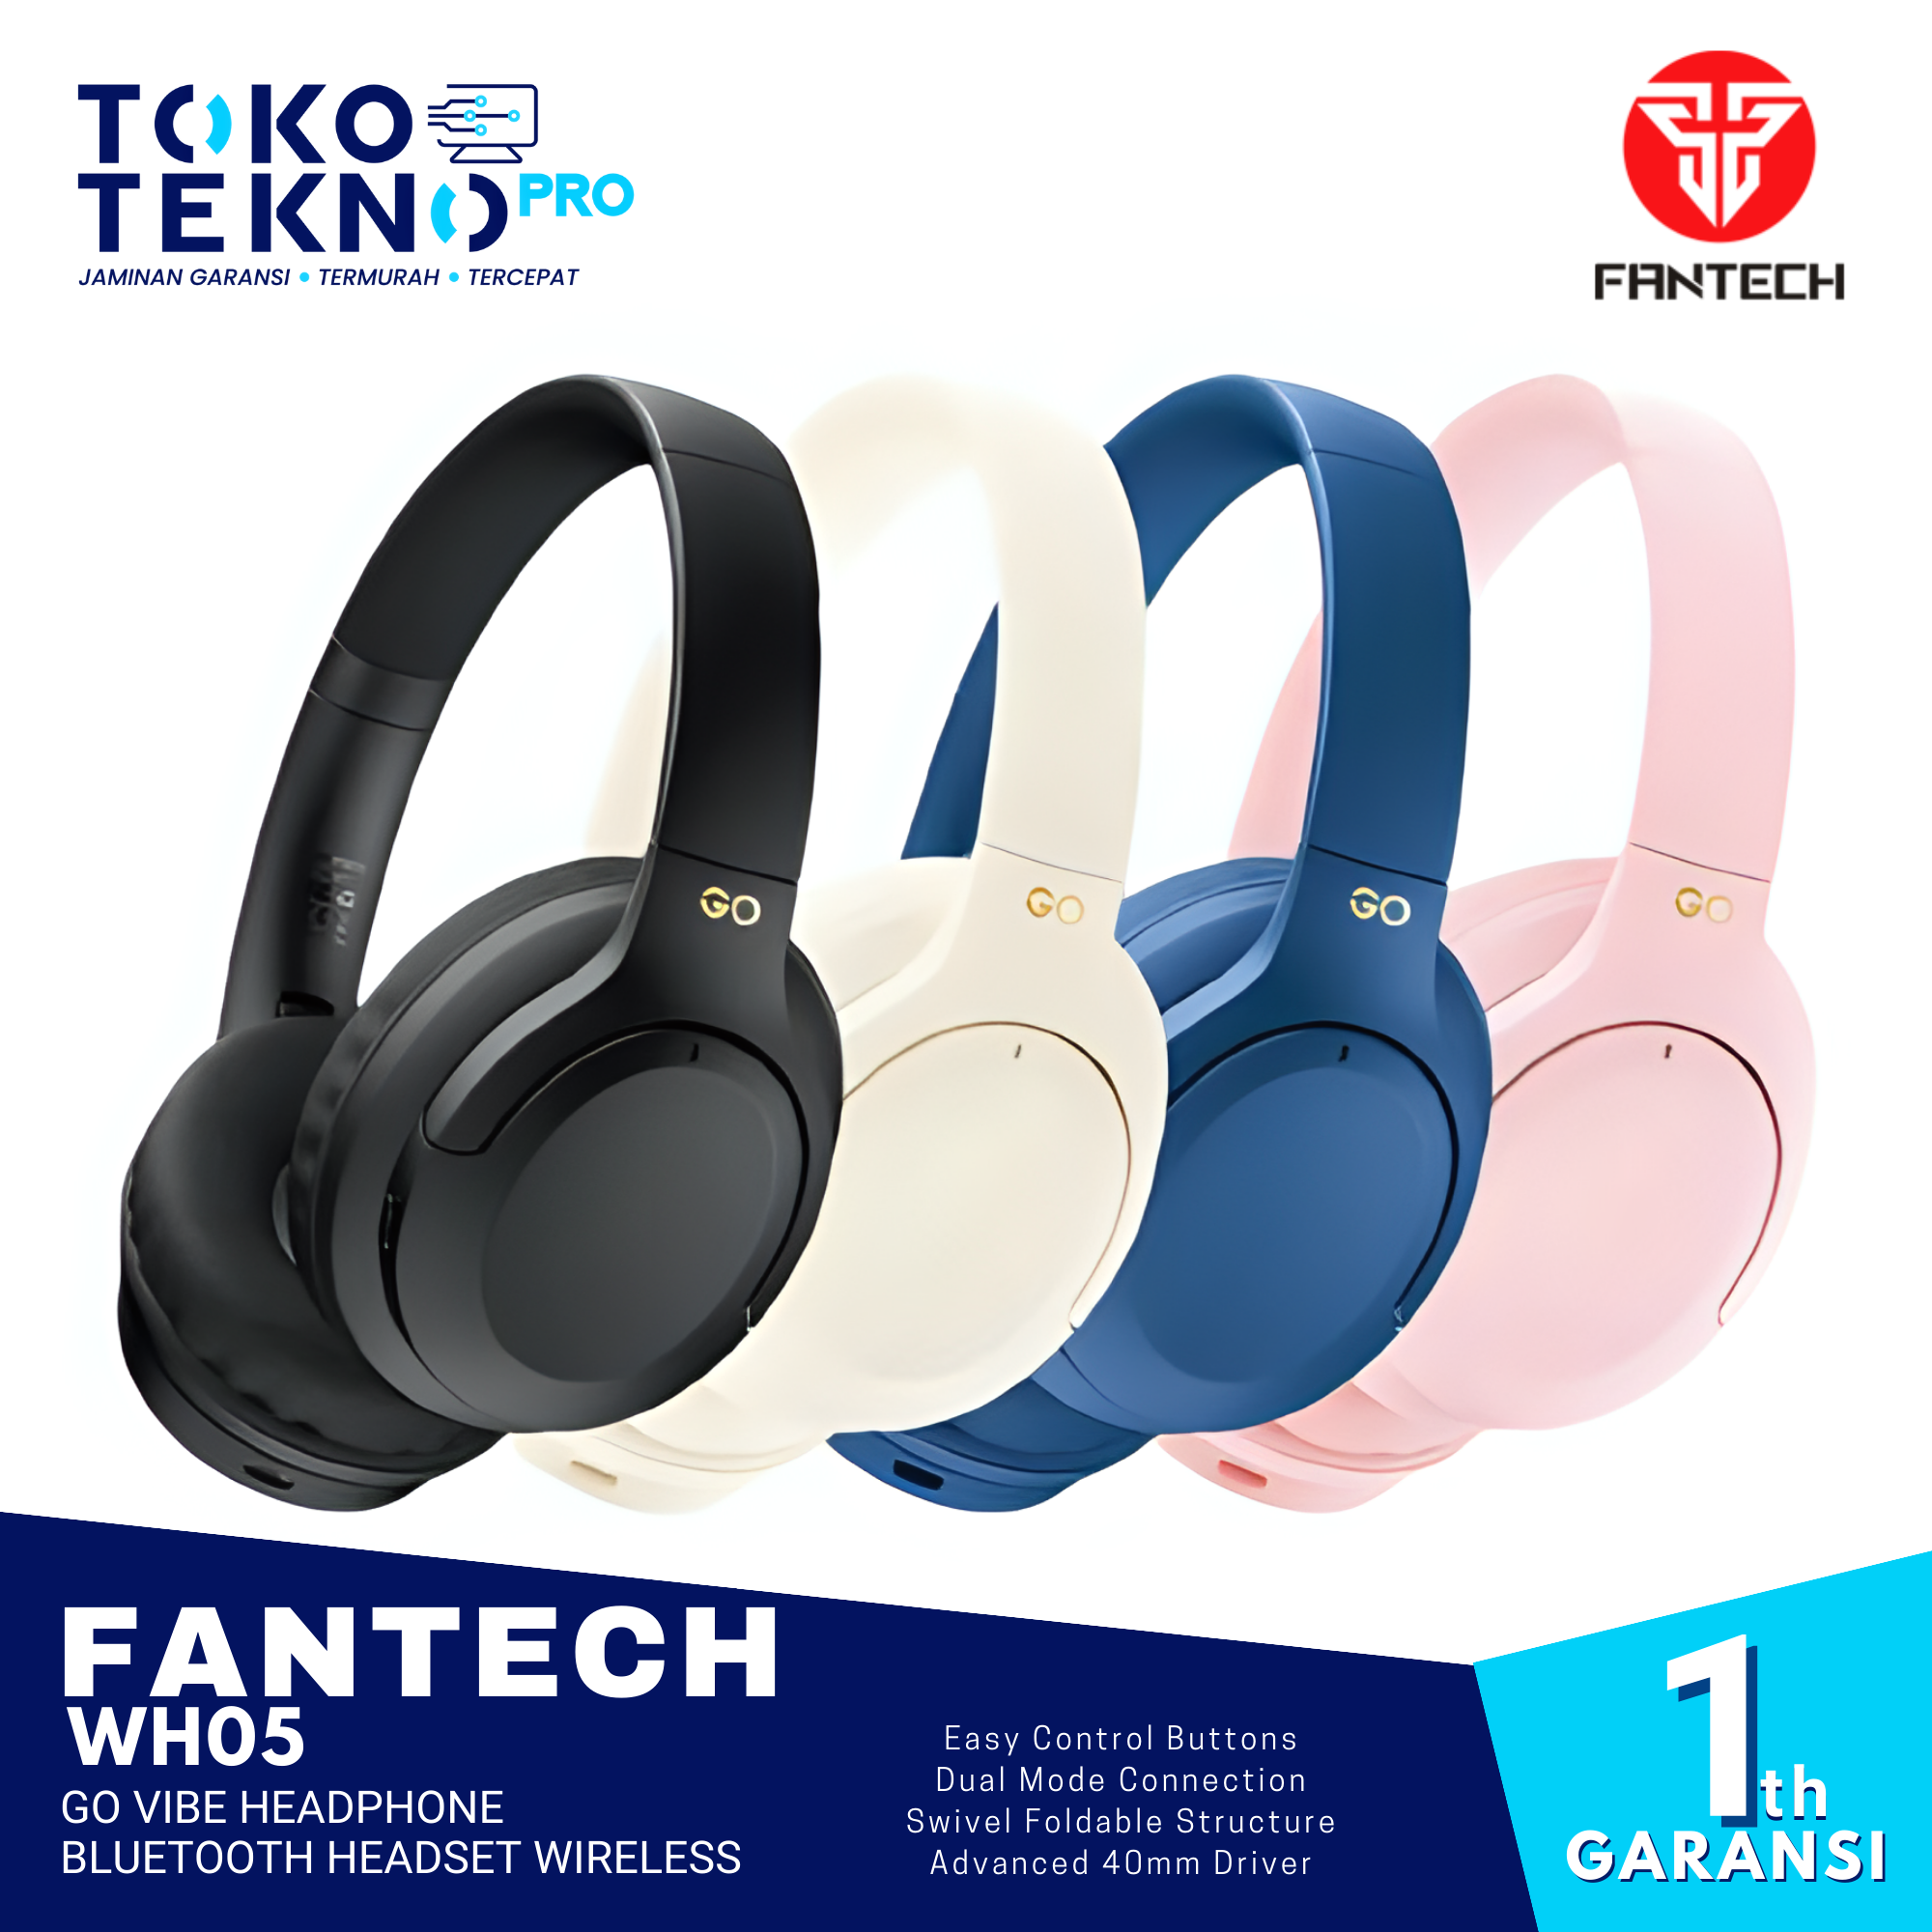 Fantech WH05 GO Vibe Headphone Bluetooth Headset Wireless